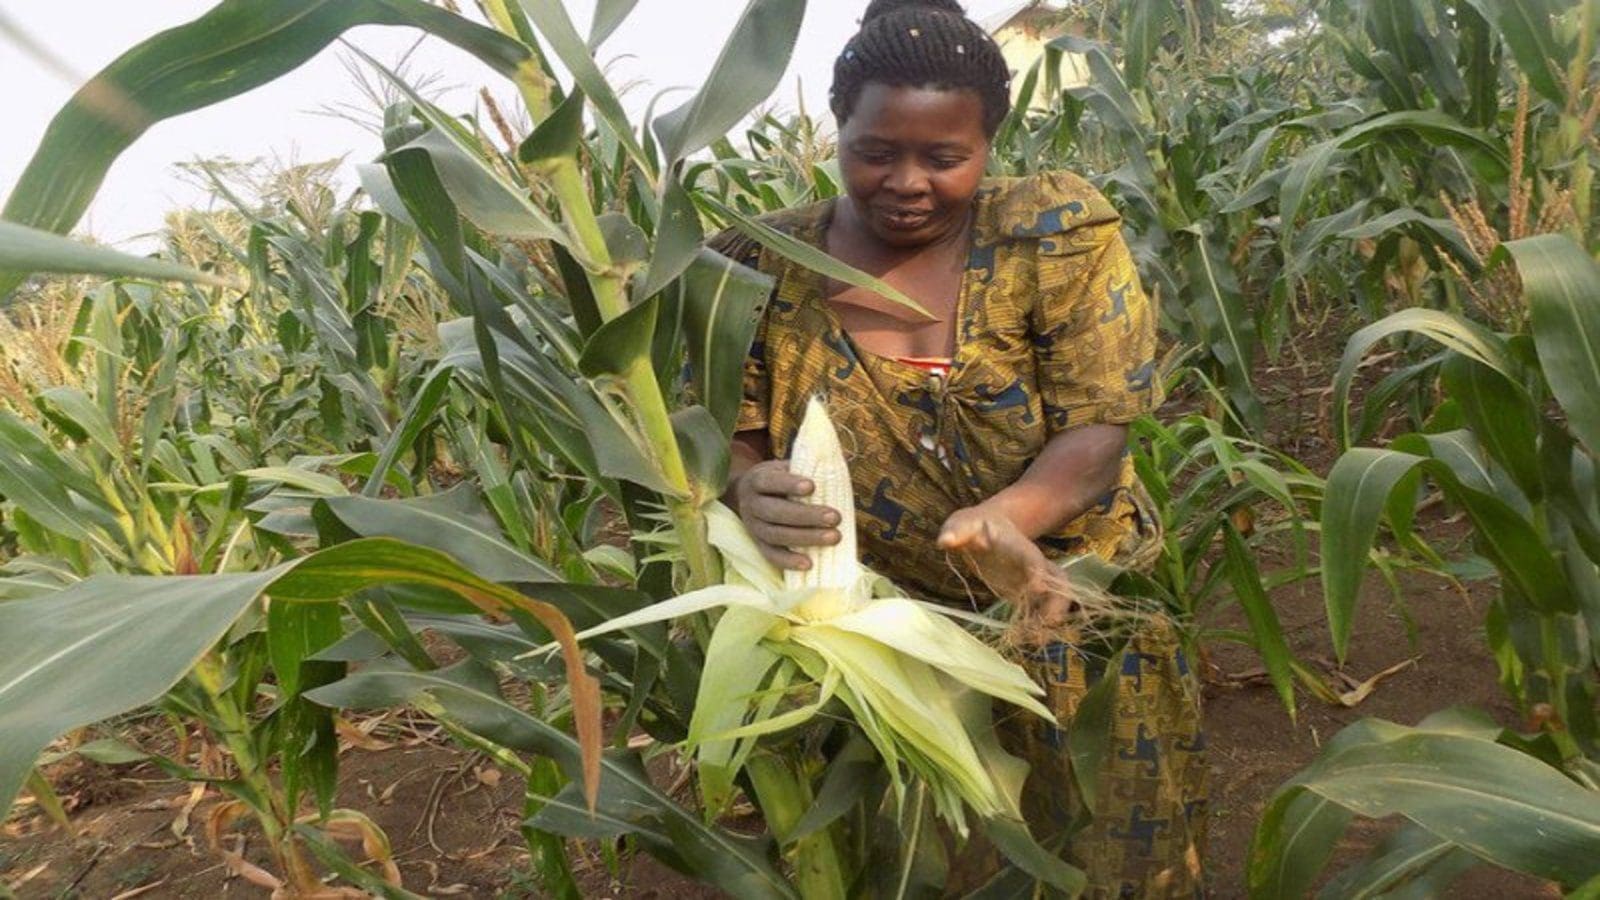 GMOs approval stalls in Uganda despite successful field trials